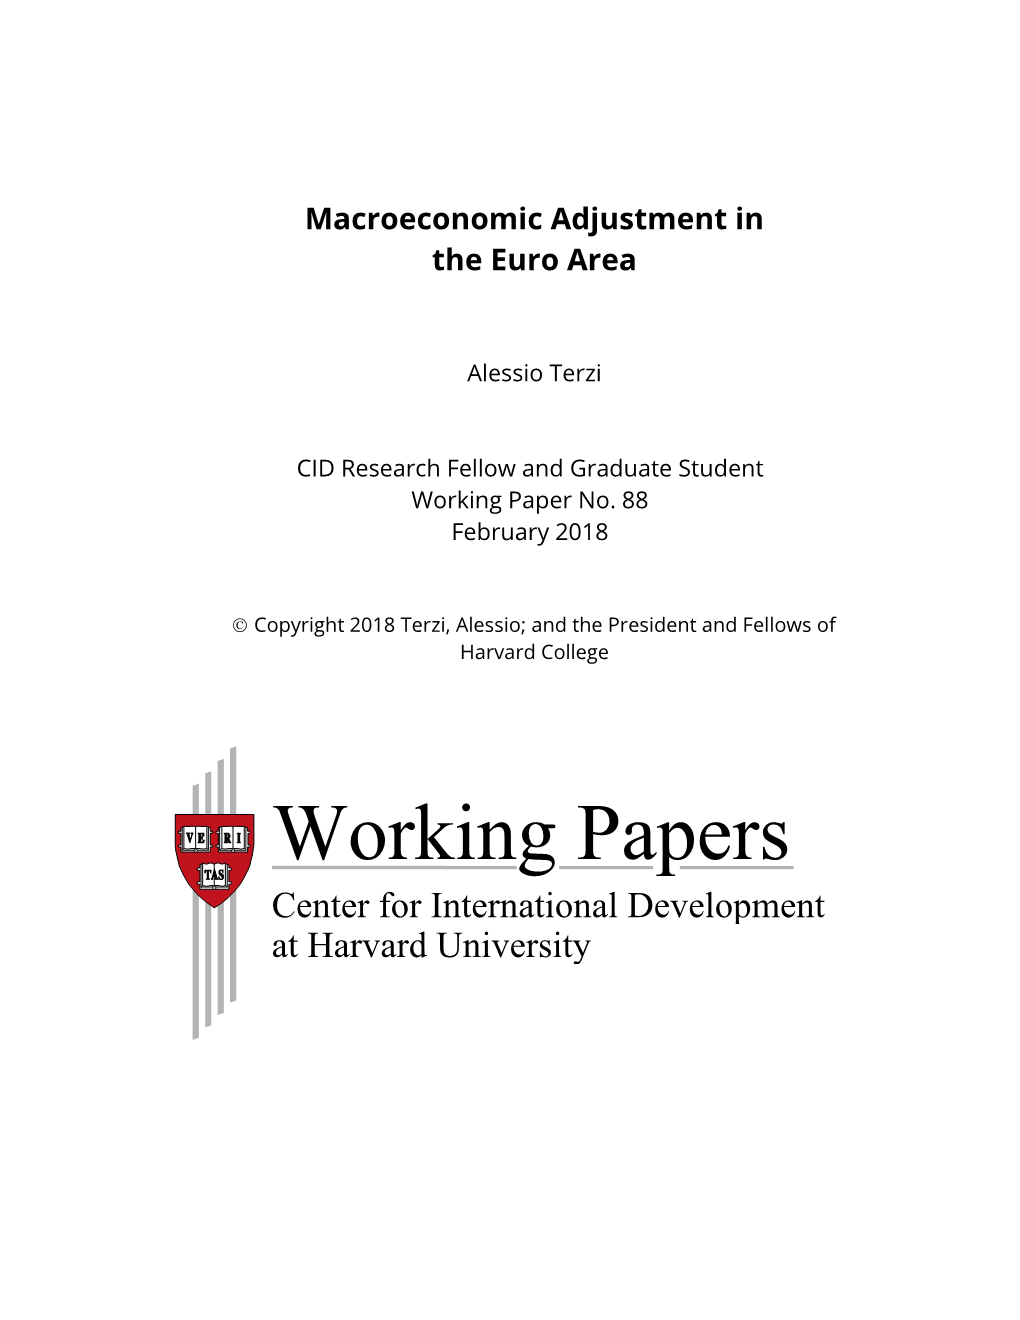 Macroeconomic Adjustment in the Euro Area